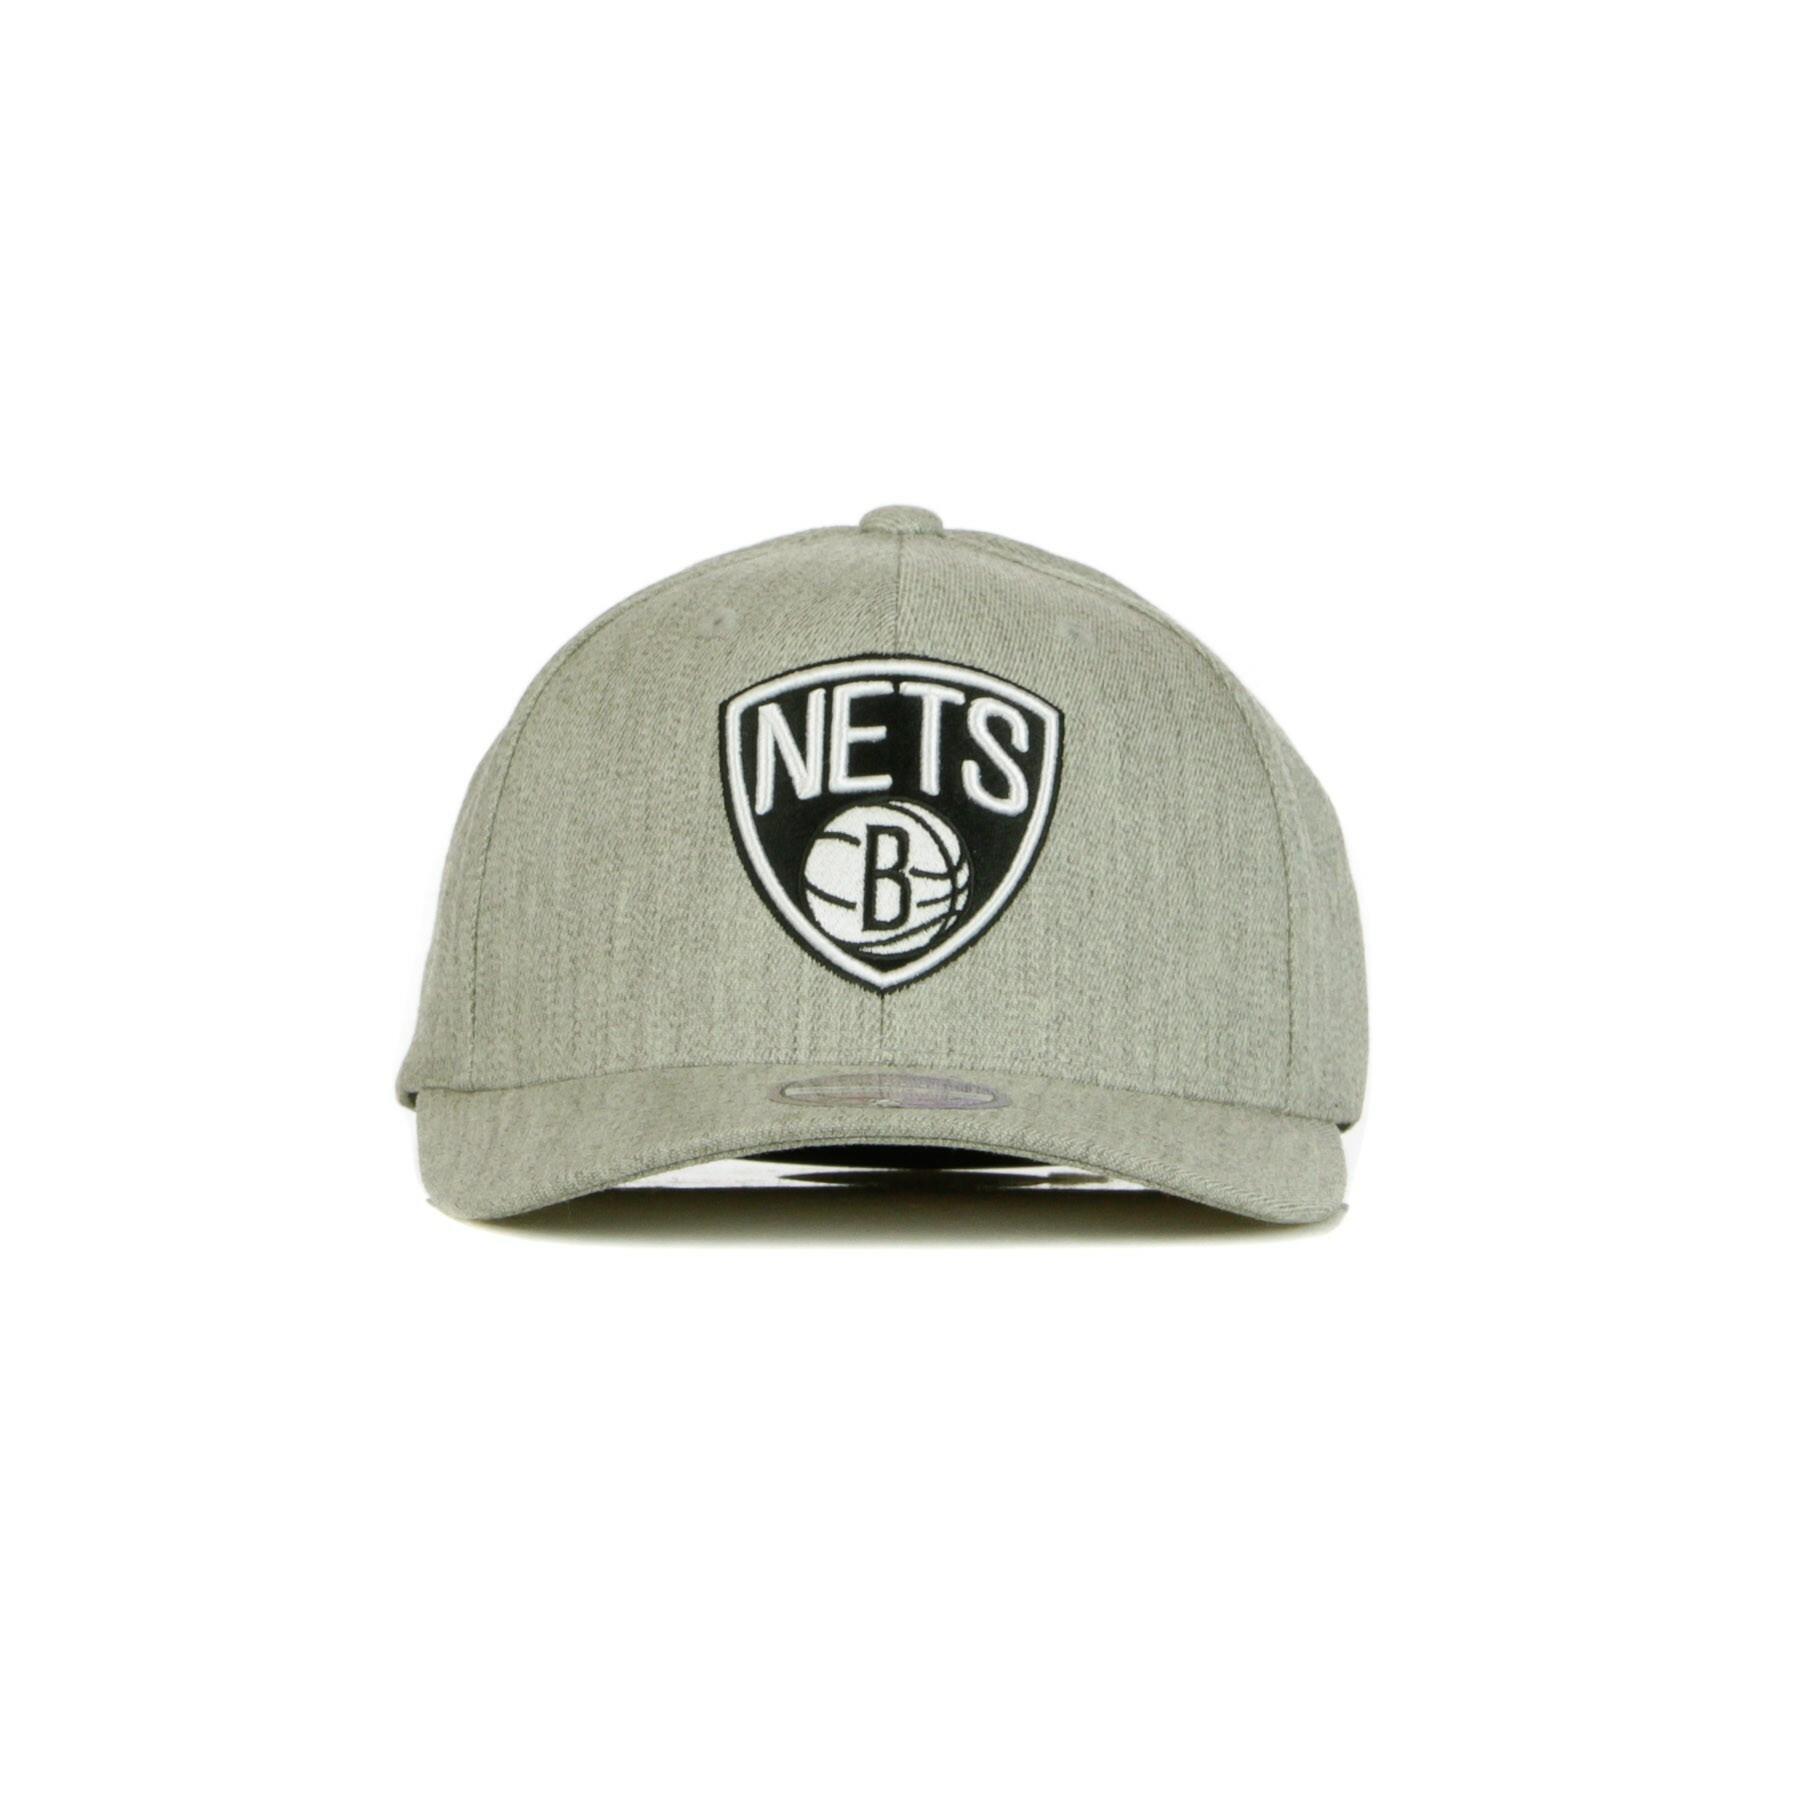 Pet Brooklyn Nets blk/wht logo 110